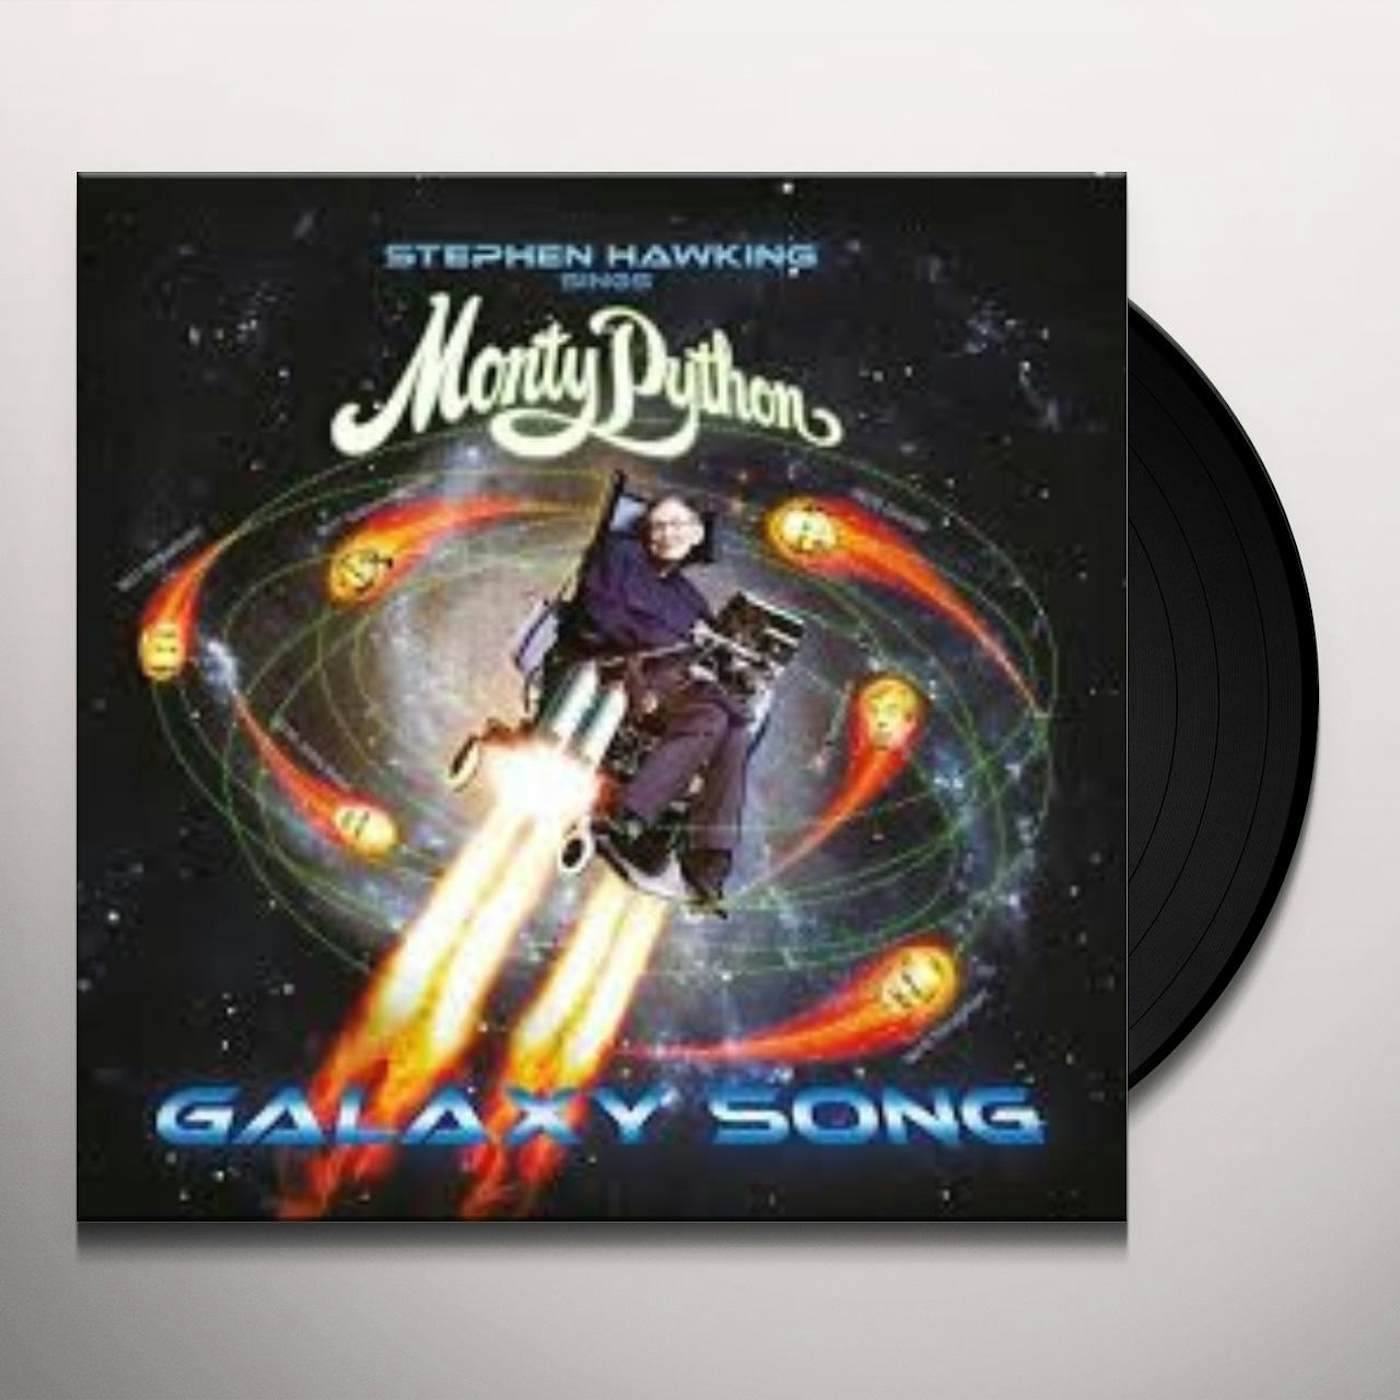 Monty Python GALAXY SONG (STEPHEN HAWKING VERSION) Vinyl Record